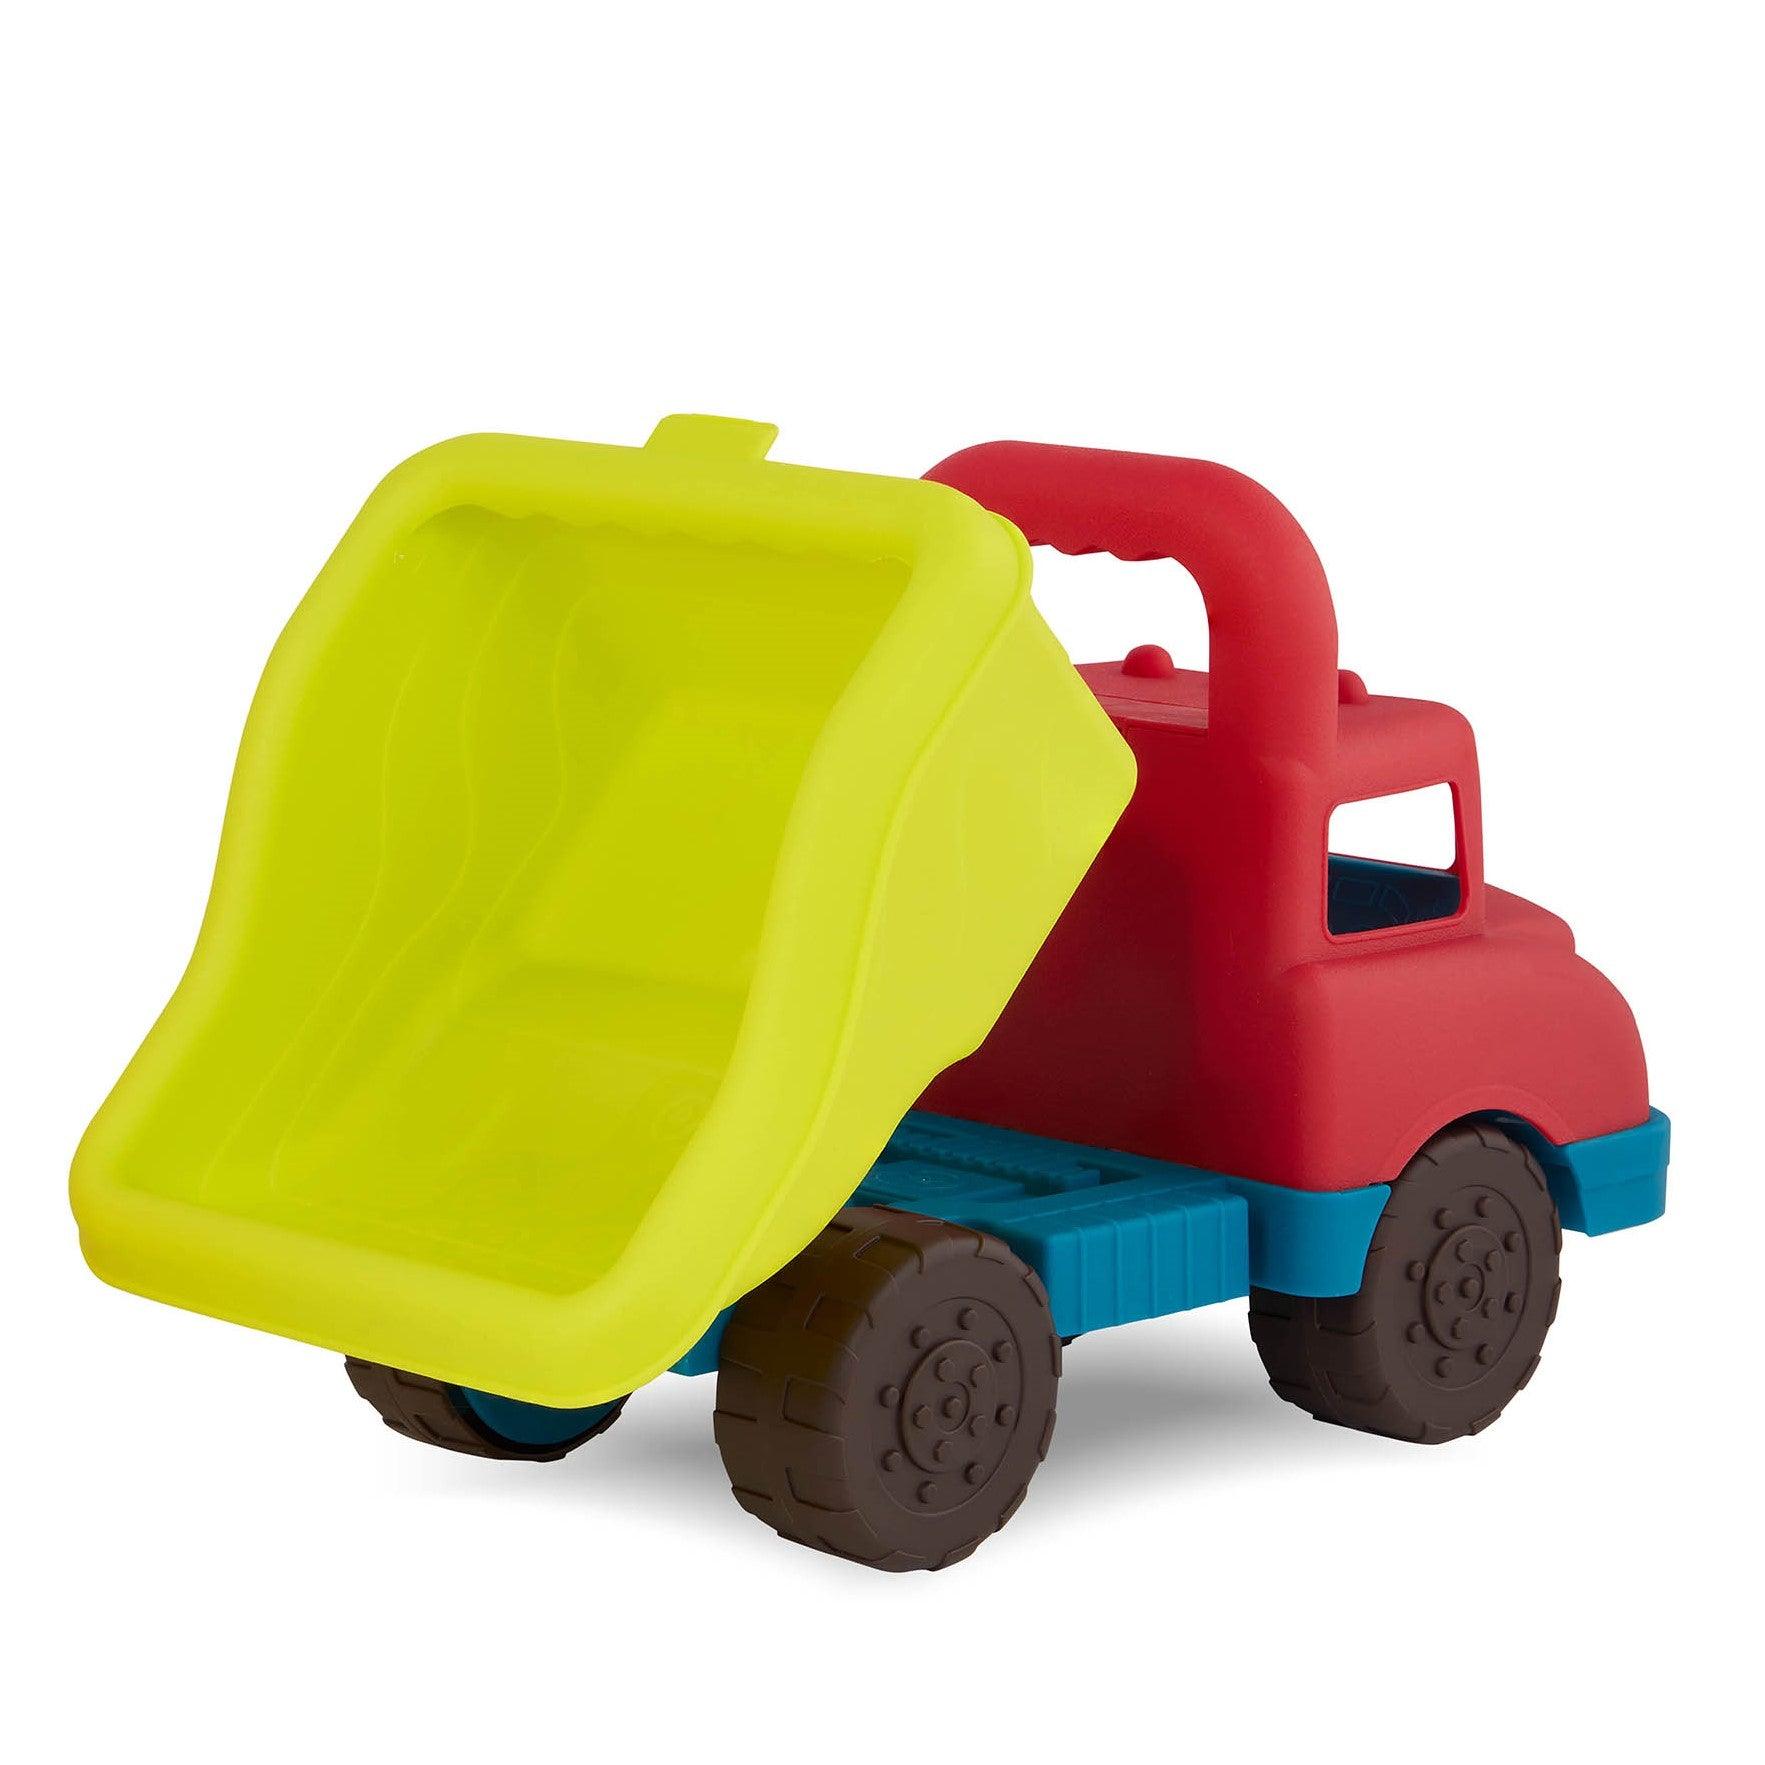 B.Toys: Tipper kamion s ručicom kamiona u grab-n-go